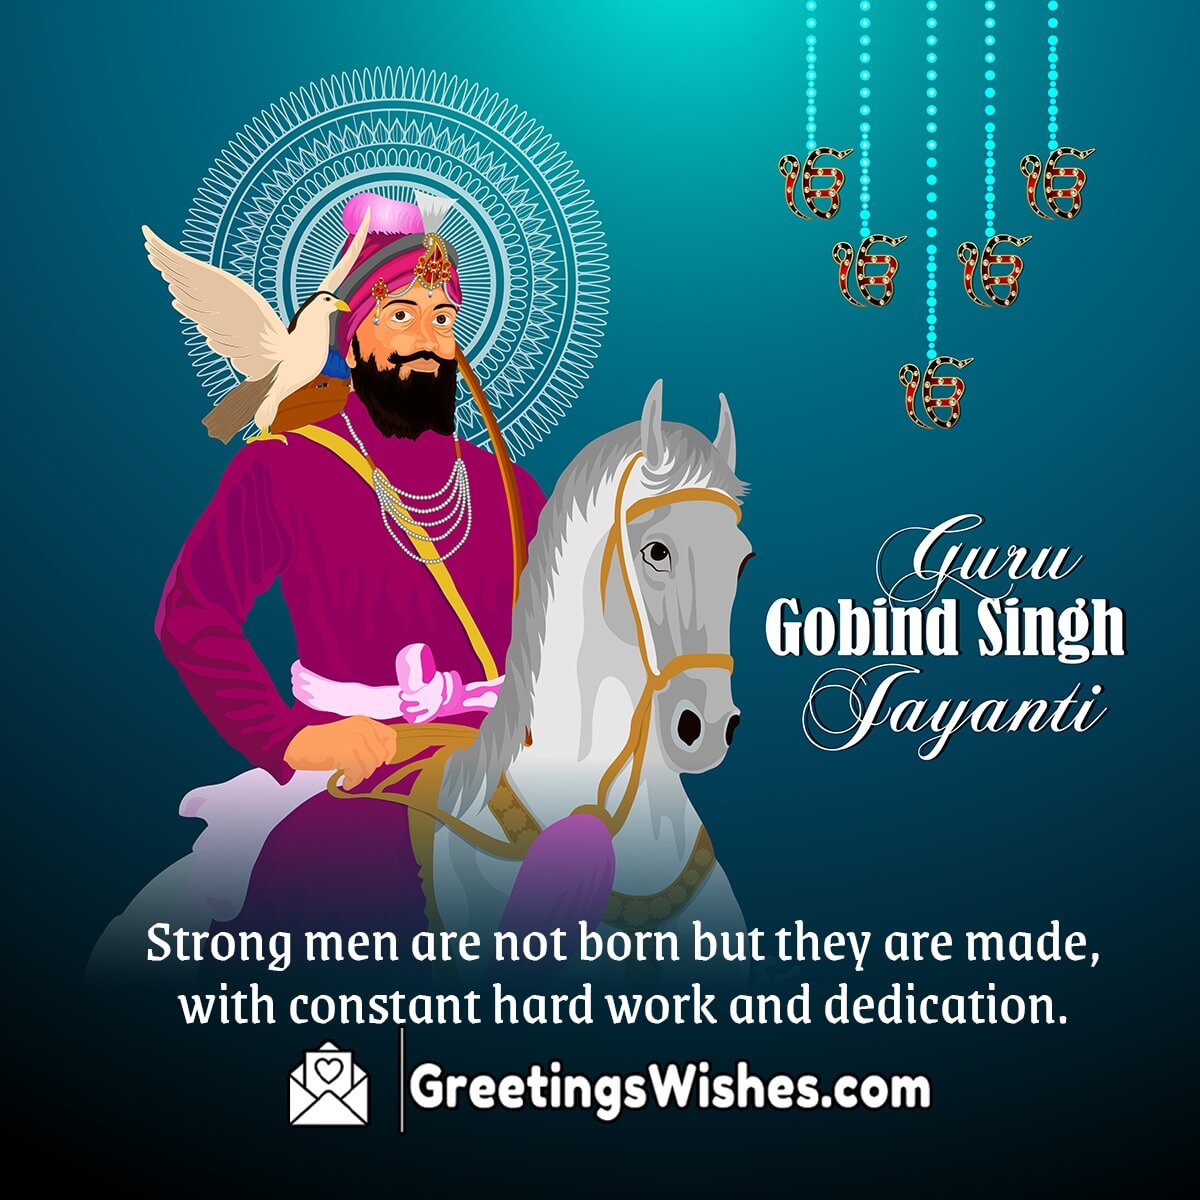 Guru Gobind Singh Jayanti Quotes